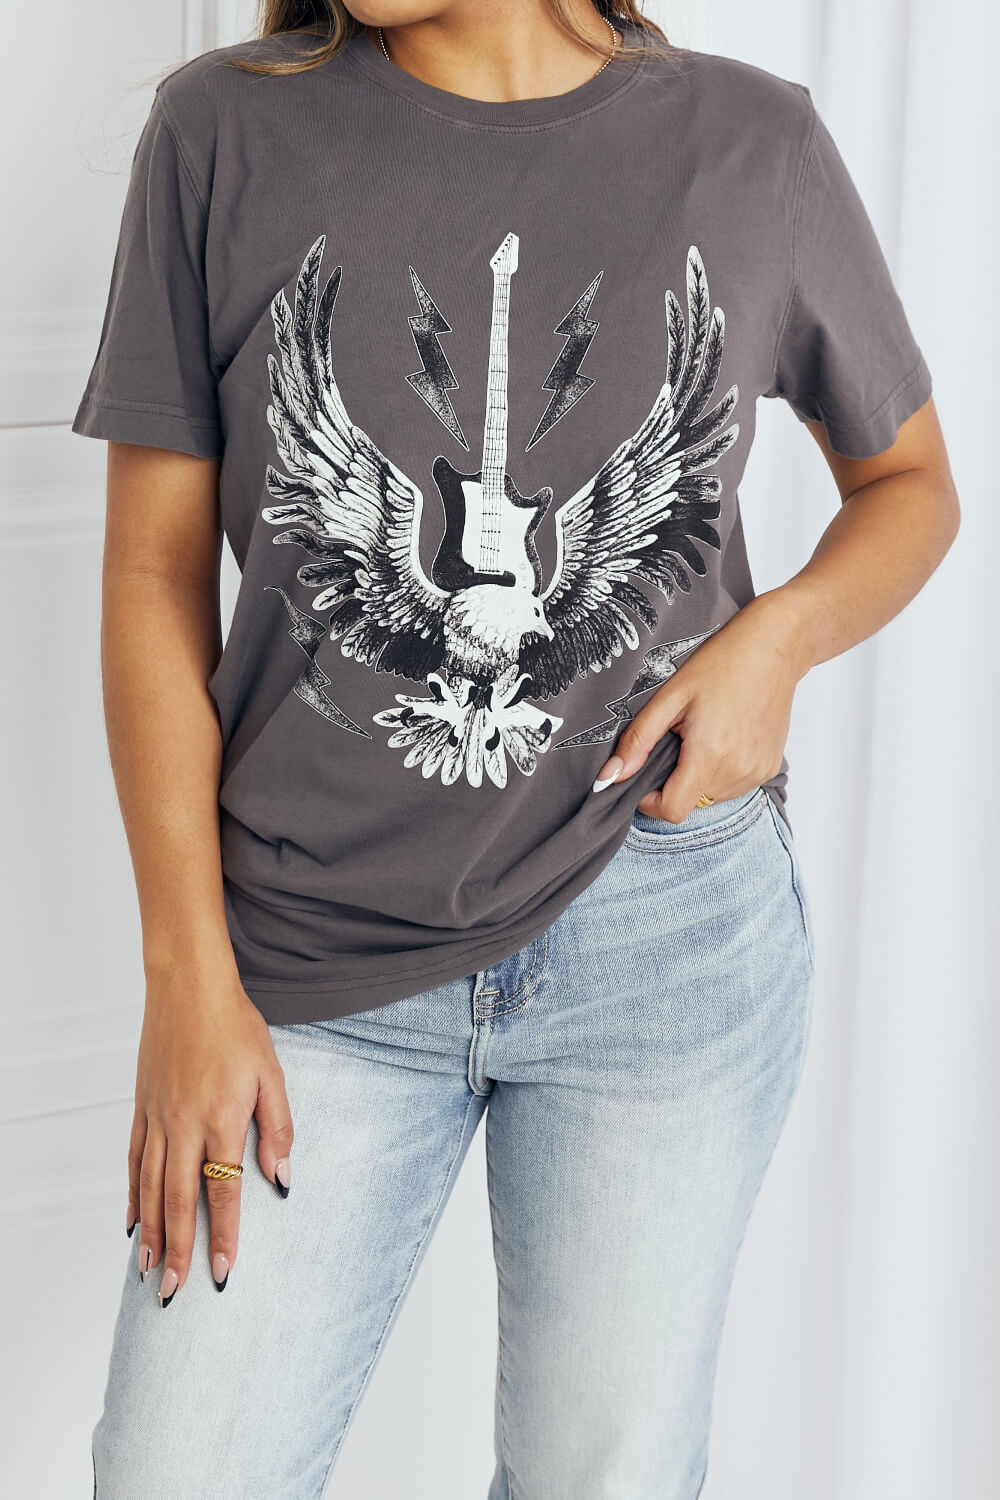 mineB Full Size Eagle Graphic Tee Shirt Trendsi